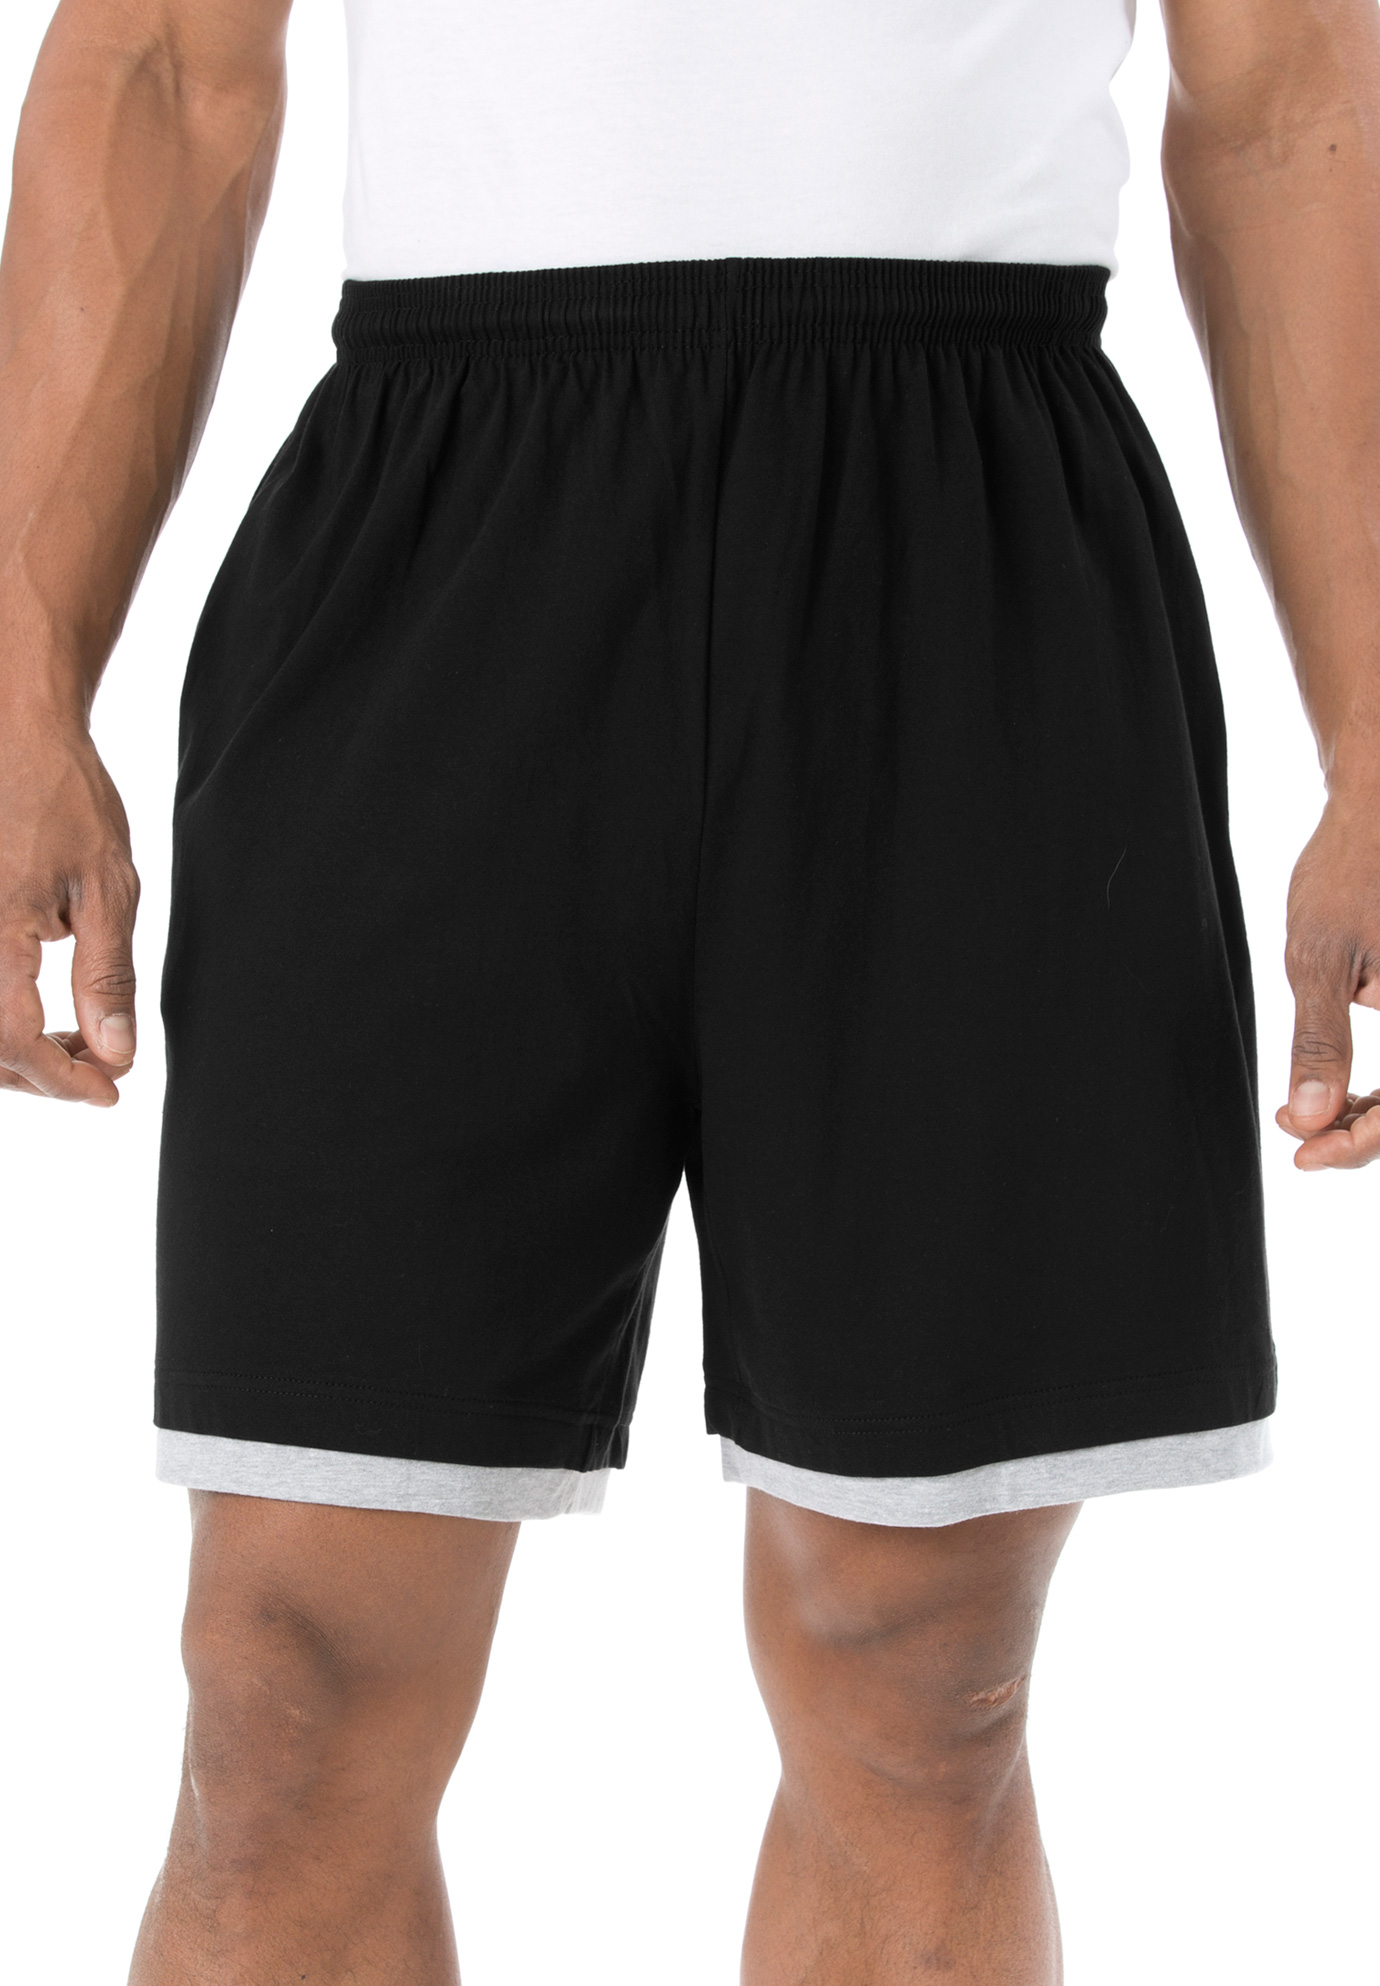 Hang-down Lightweight Shorts| Big and Tall Active Shorts | King Size